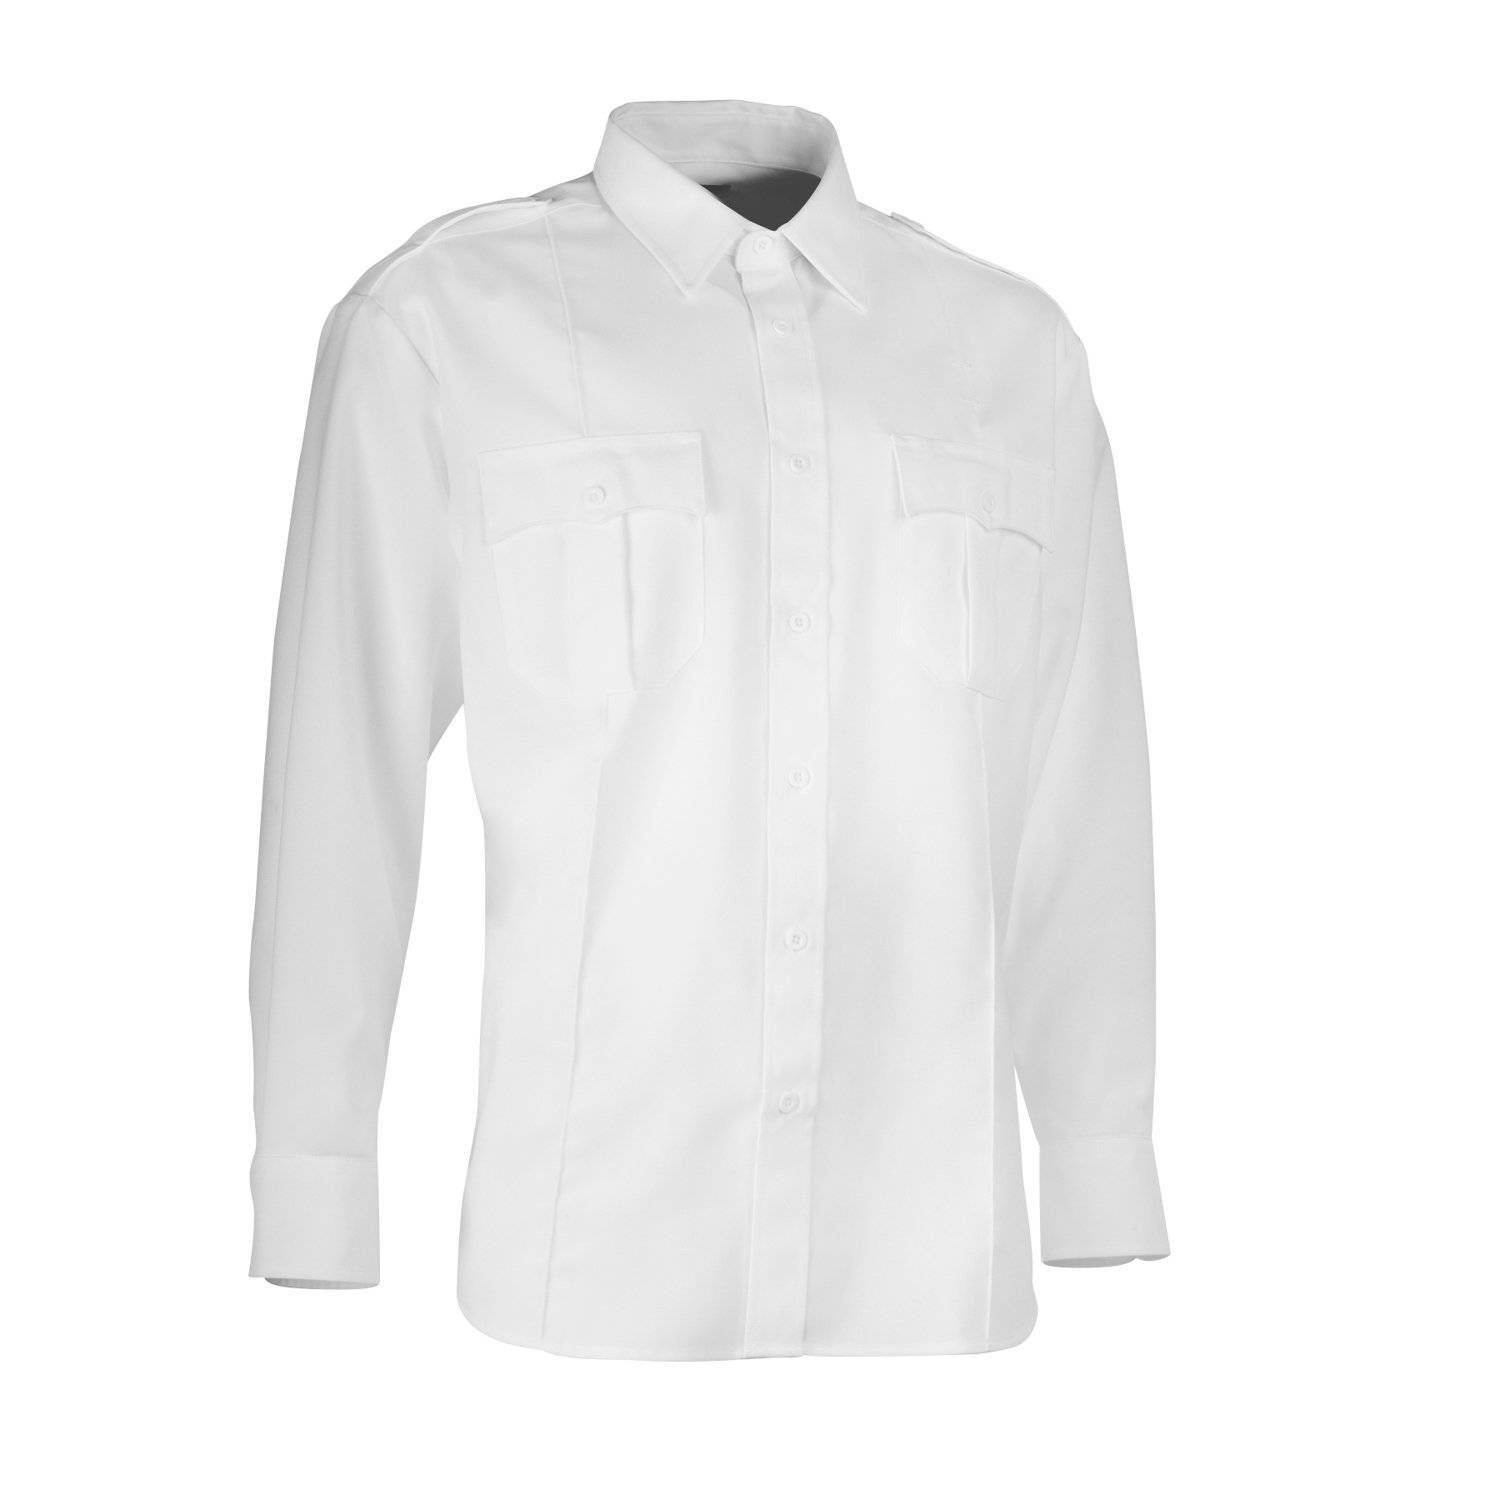 LawPro+ Men's 100% Polyester Long Sleeve Shirt